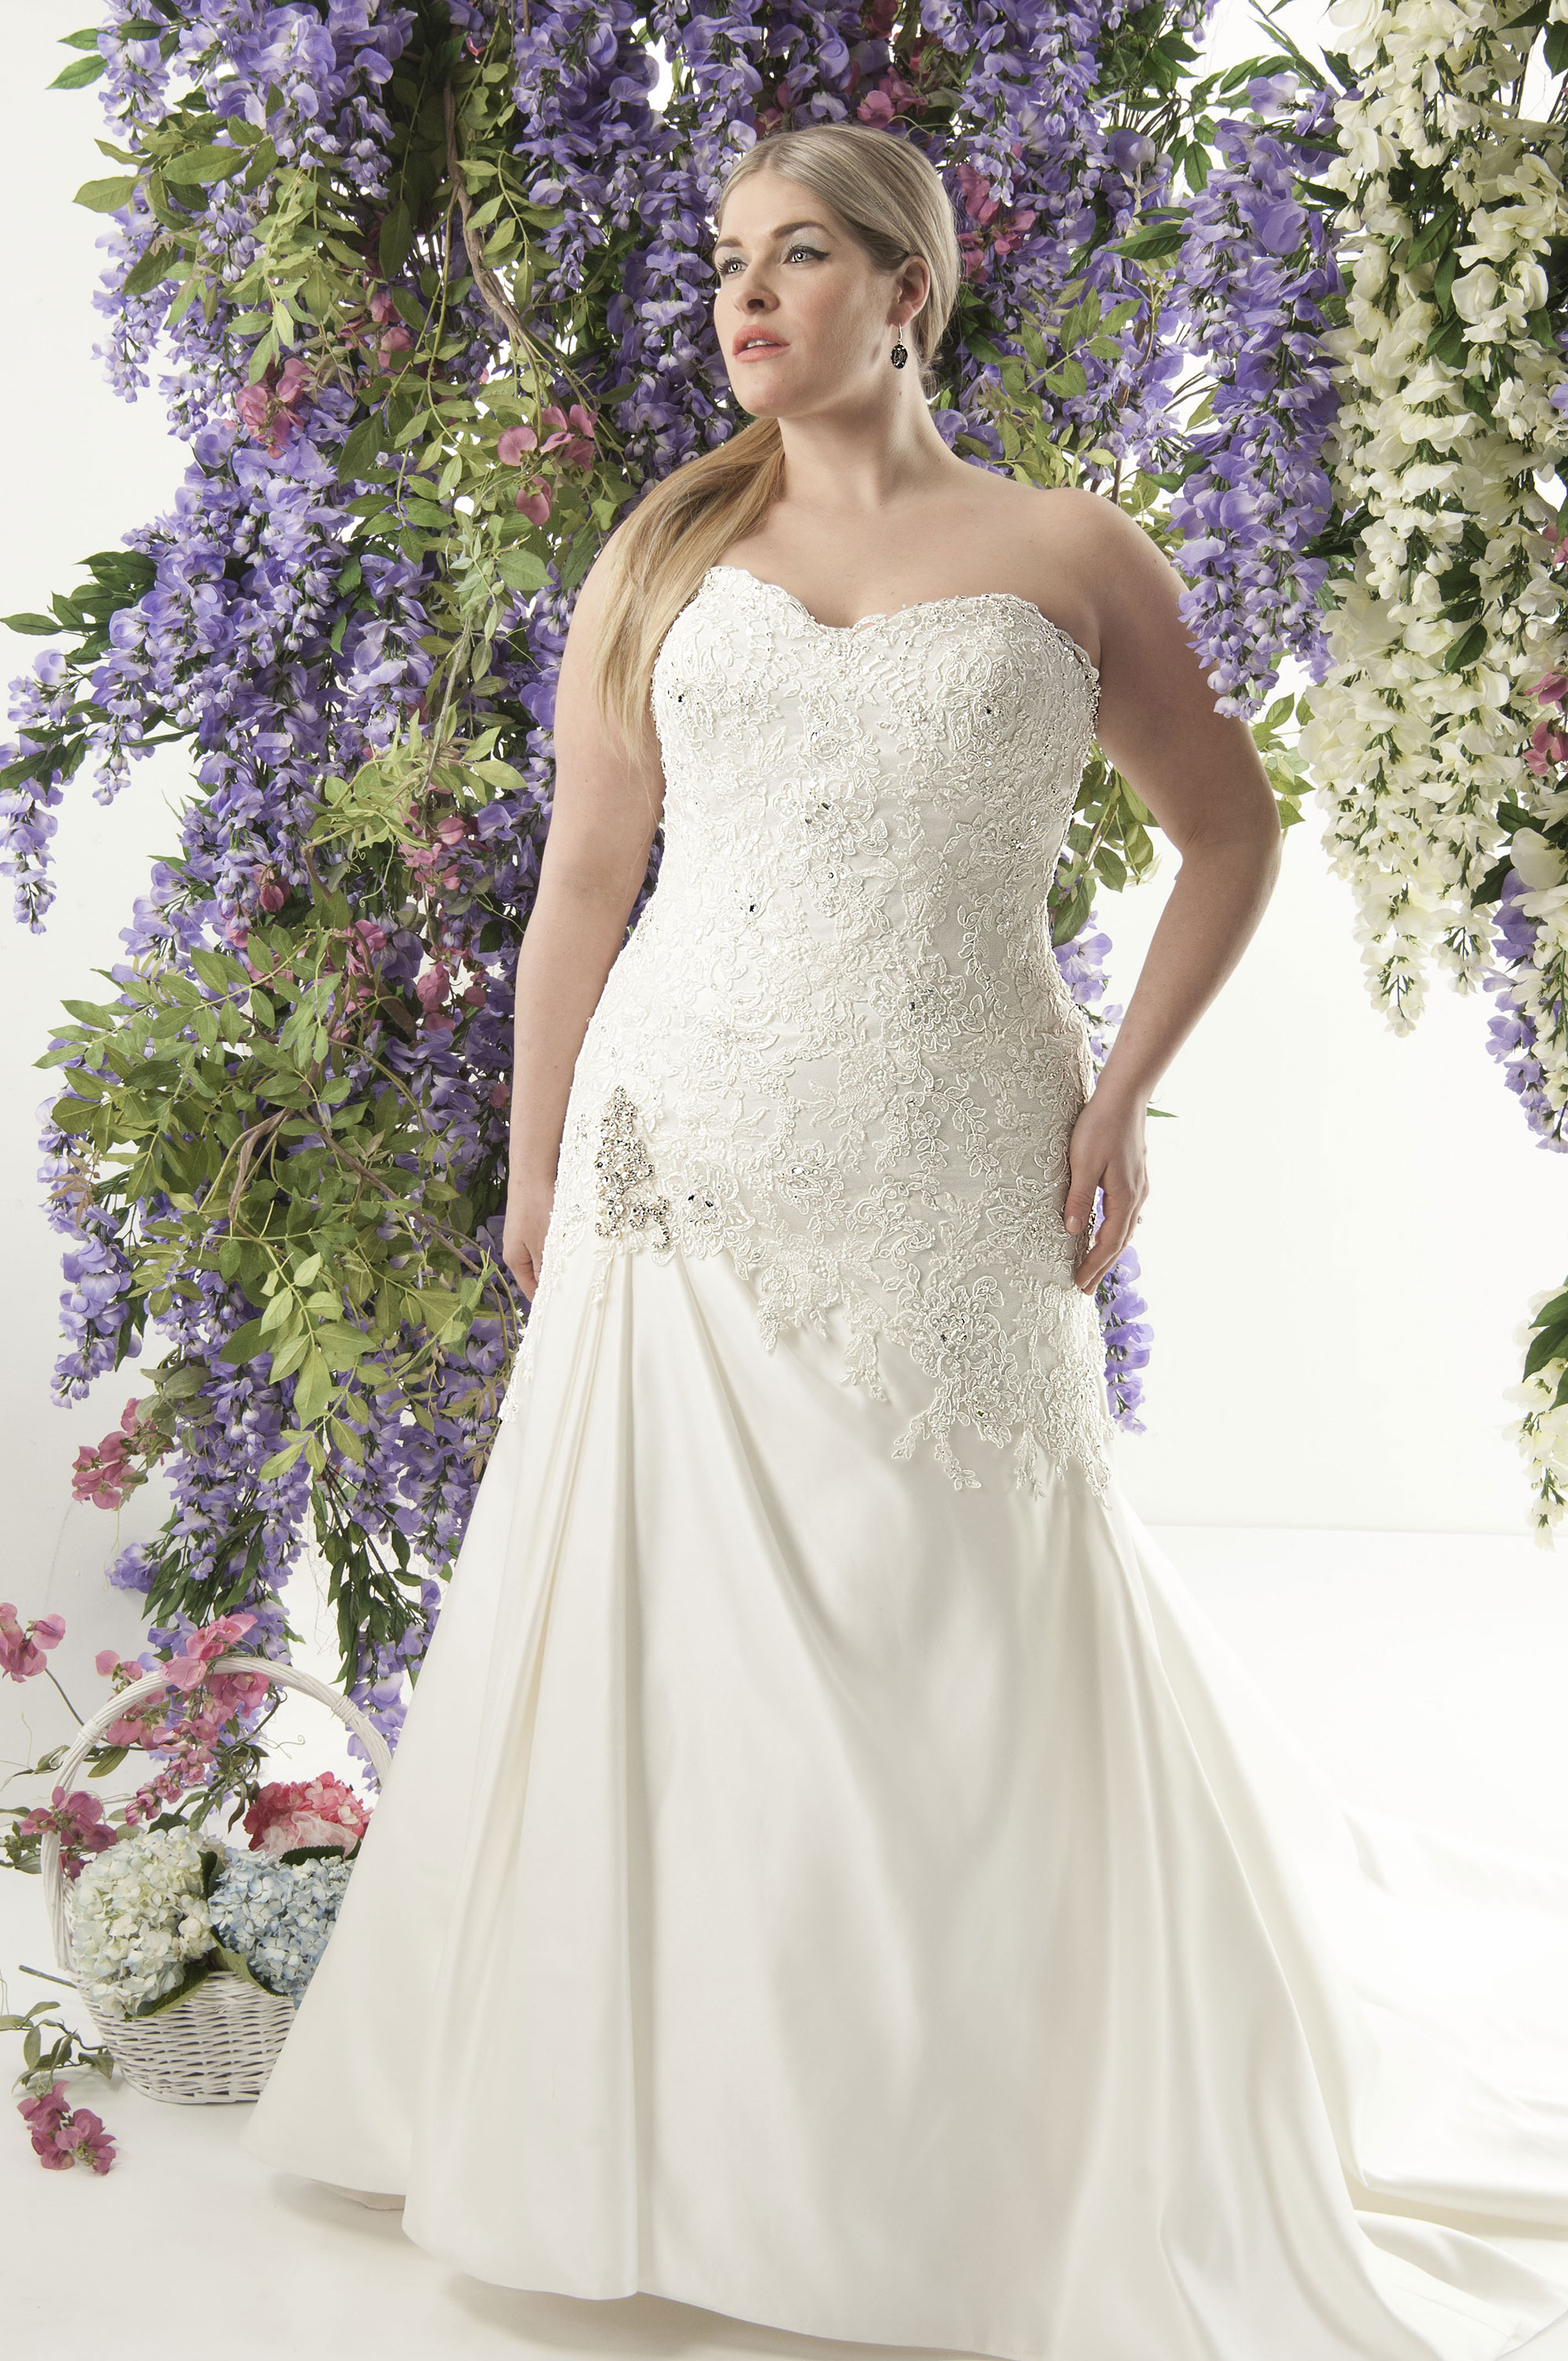 Dress - CALLISTA FALL 2014 BRIDAL Collection: 4238 - Capri - For Brides ...